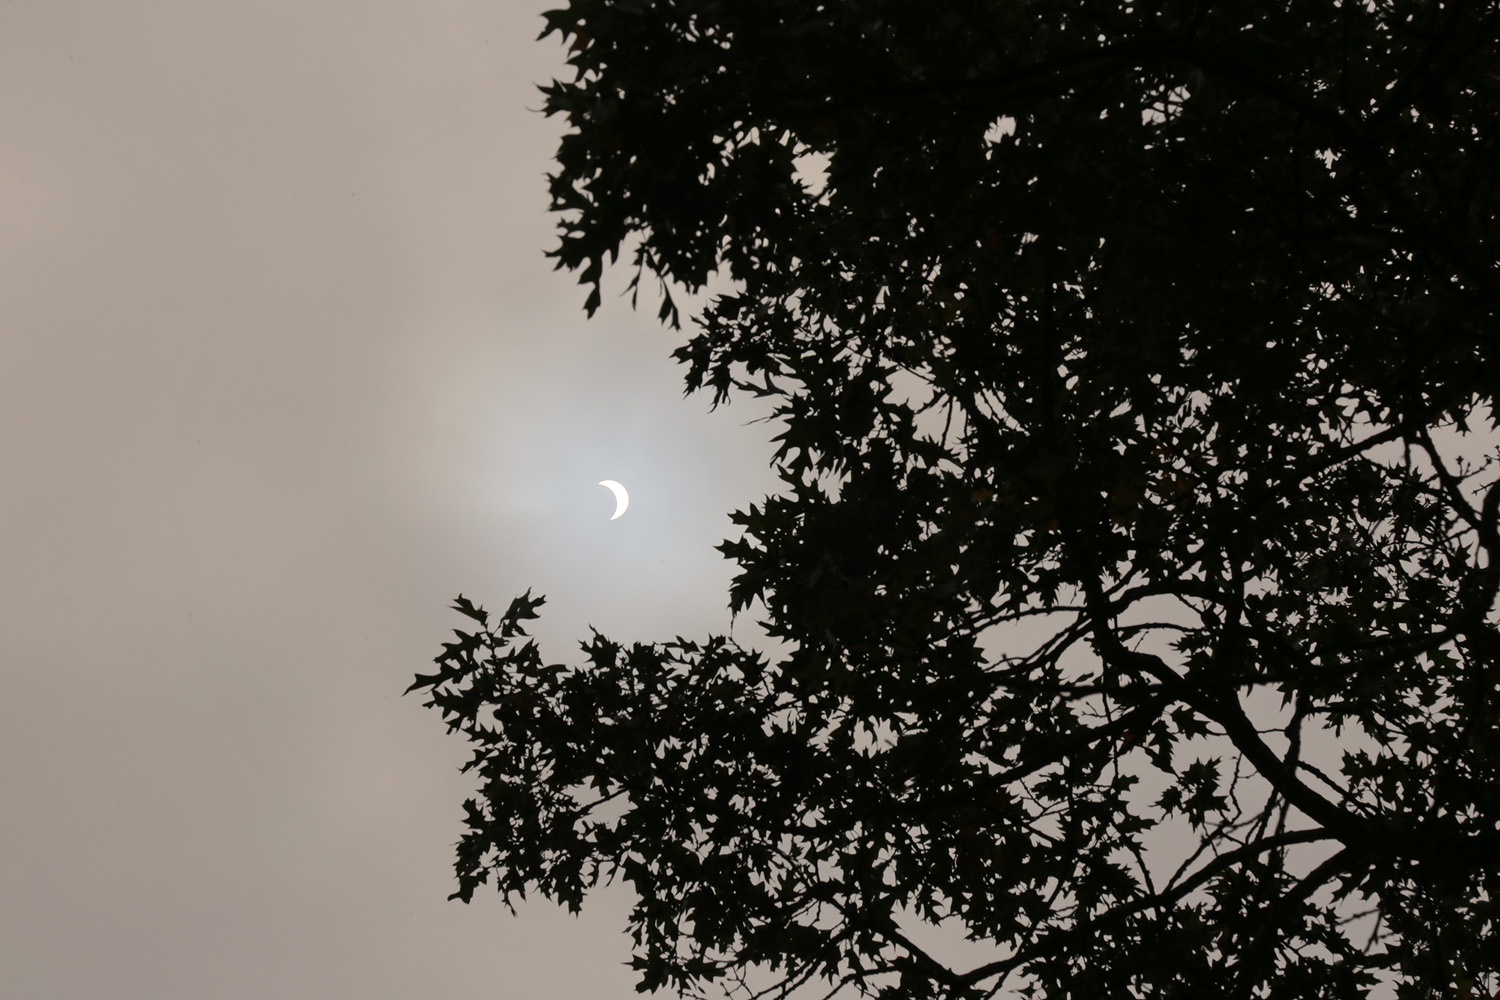 bill-hocker-solar-eclipse-napa-california-august-21-2017-10:45am-pdf-2017